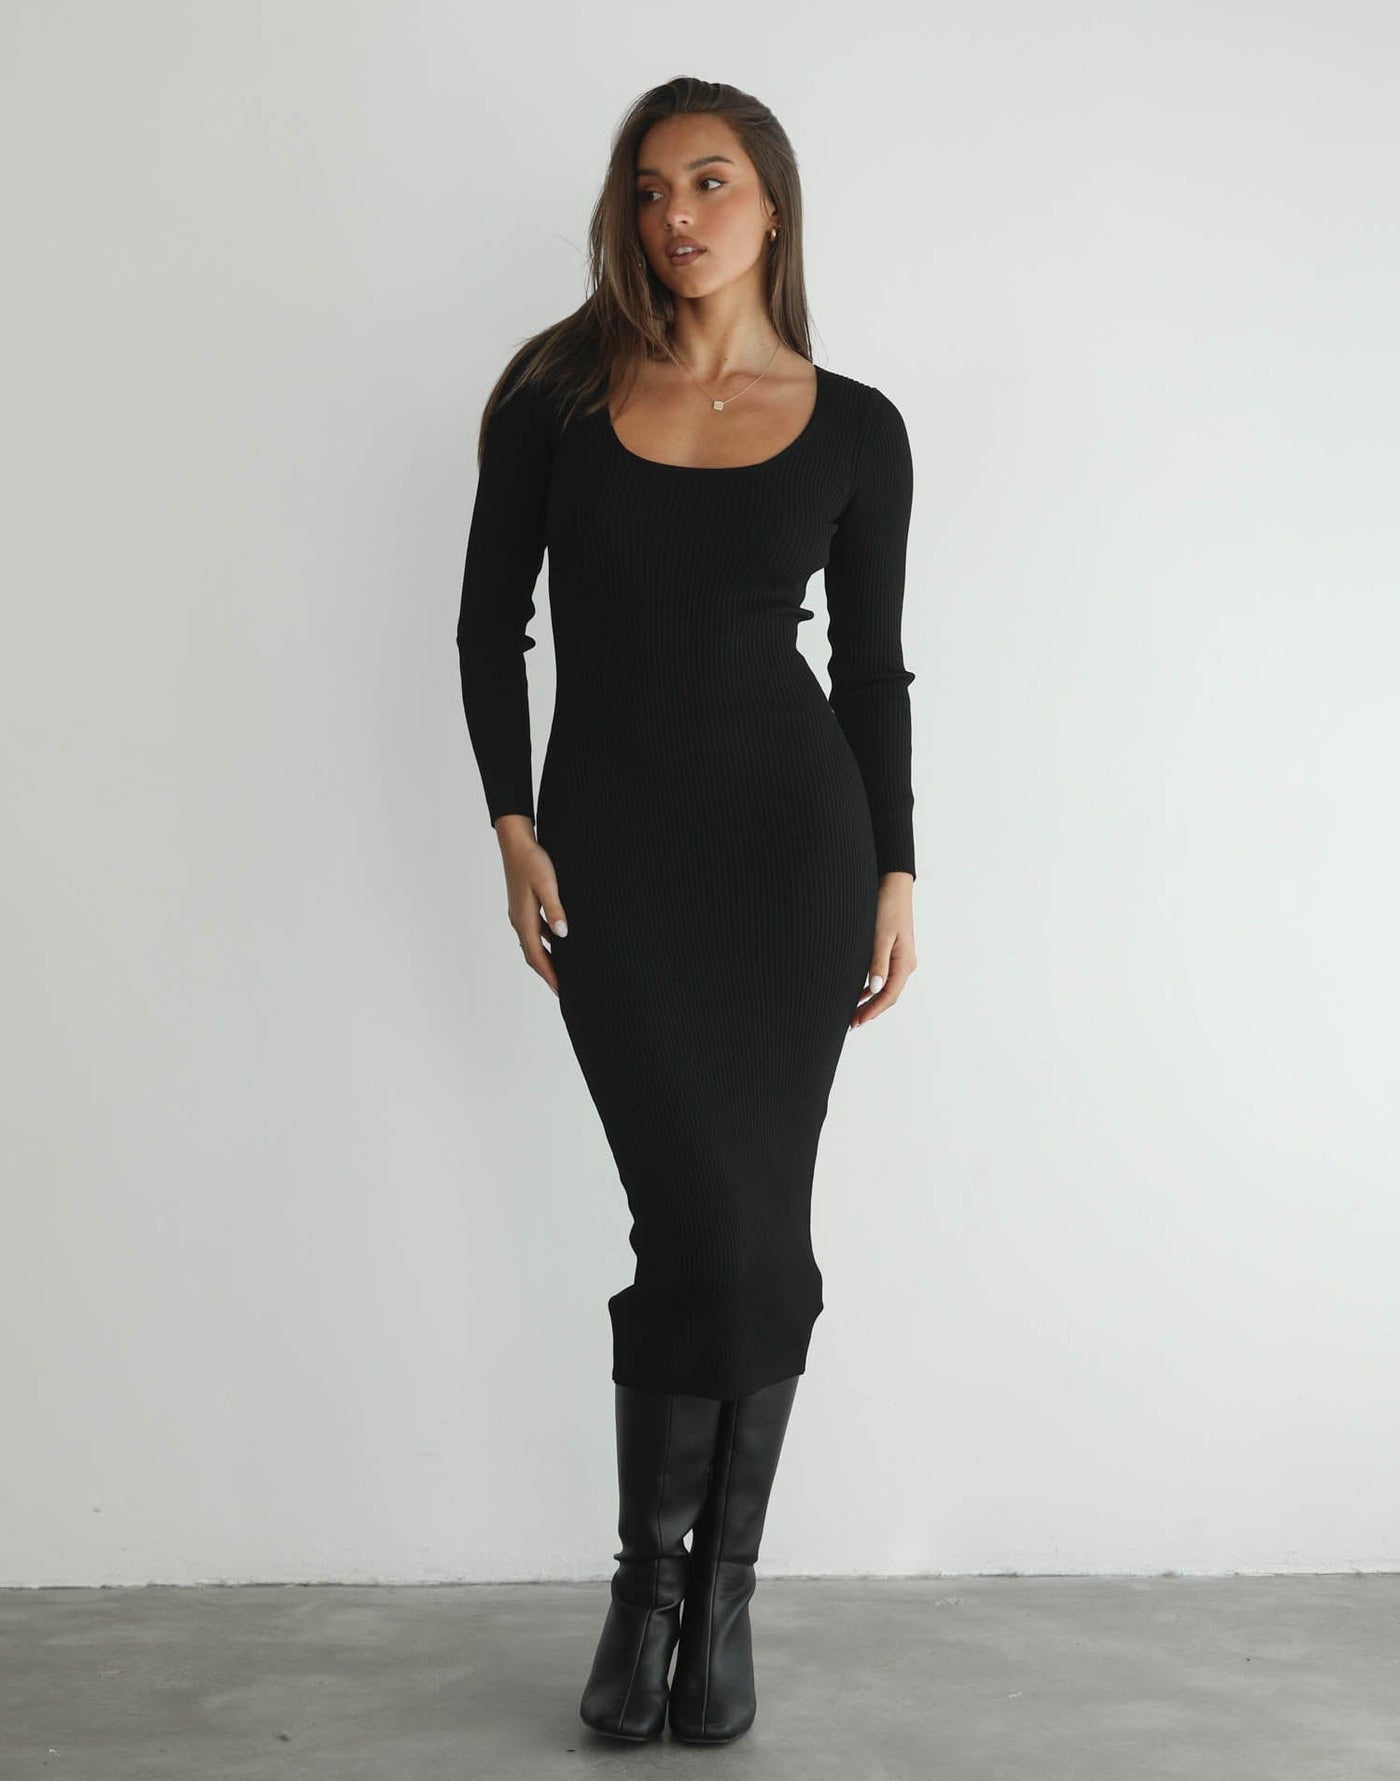 Pavel Maxi Dress (Black) - Ribbed Knit Maxi Dress - Women's Dress - Charcoal Clothing